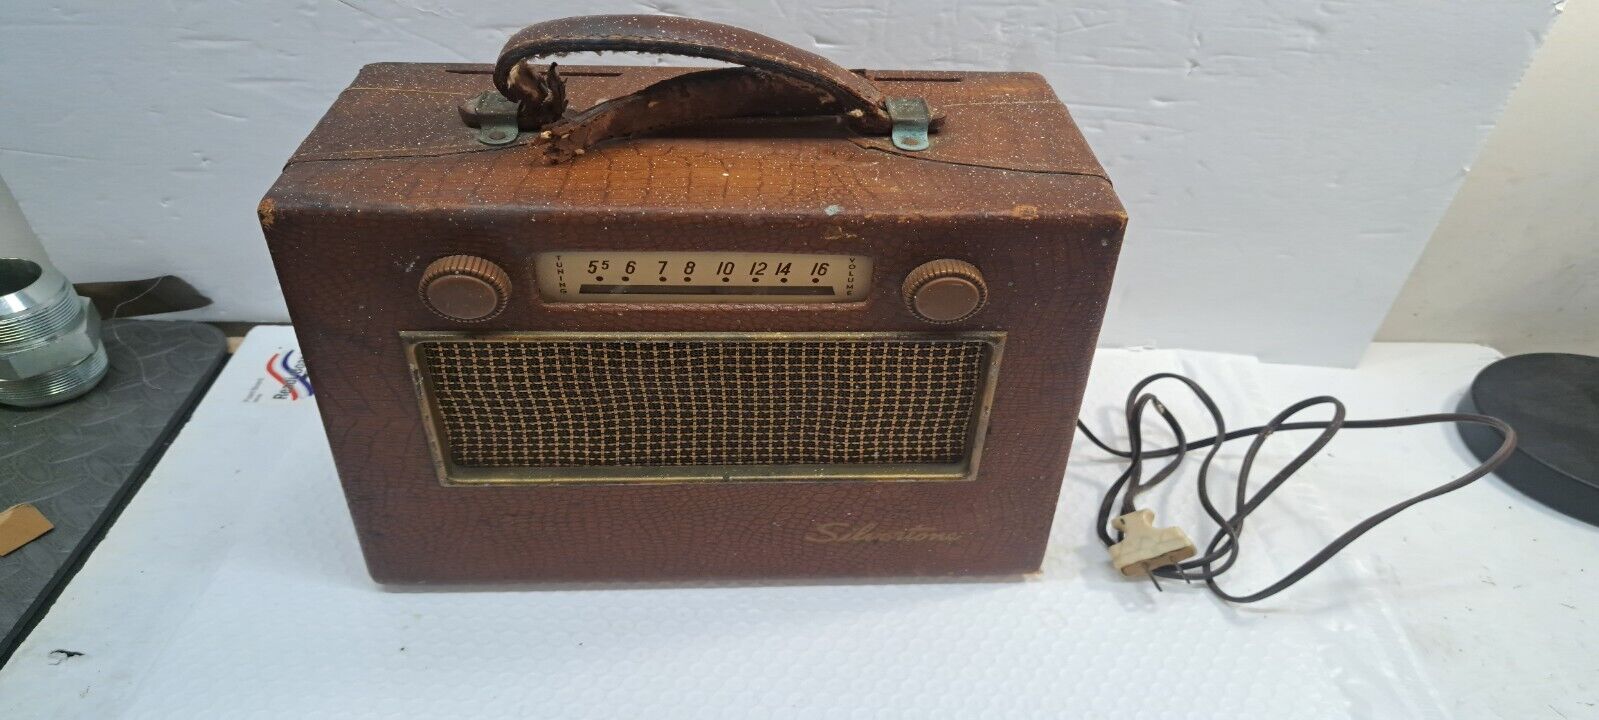 Antique Silvertone Tube Radio No. 225 Sears Roebuck & Co USA Works